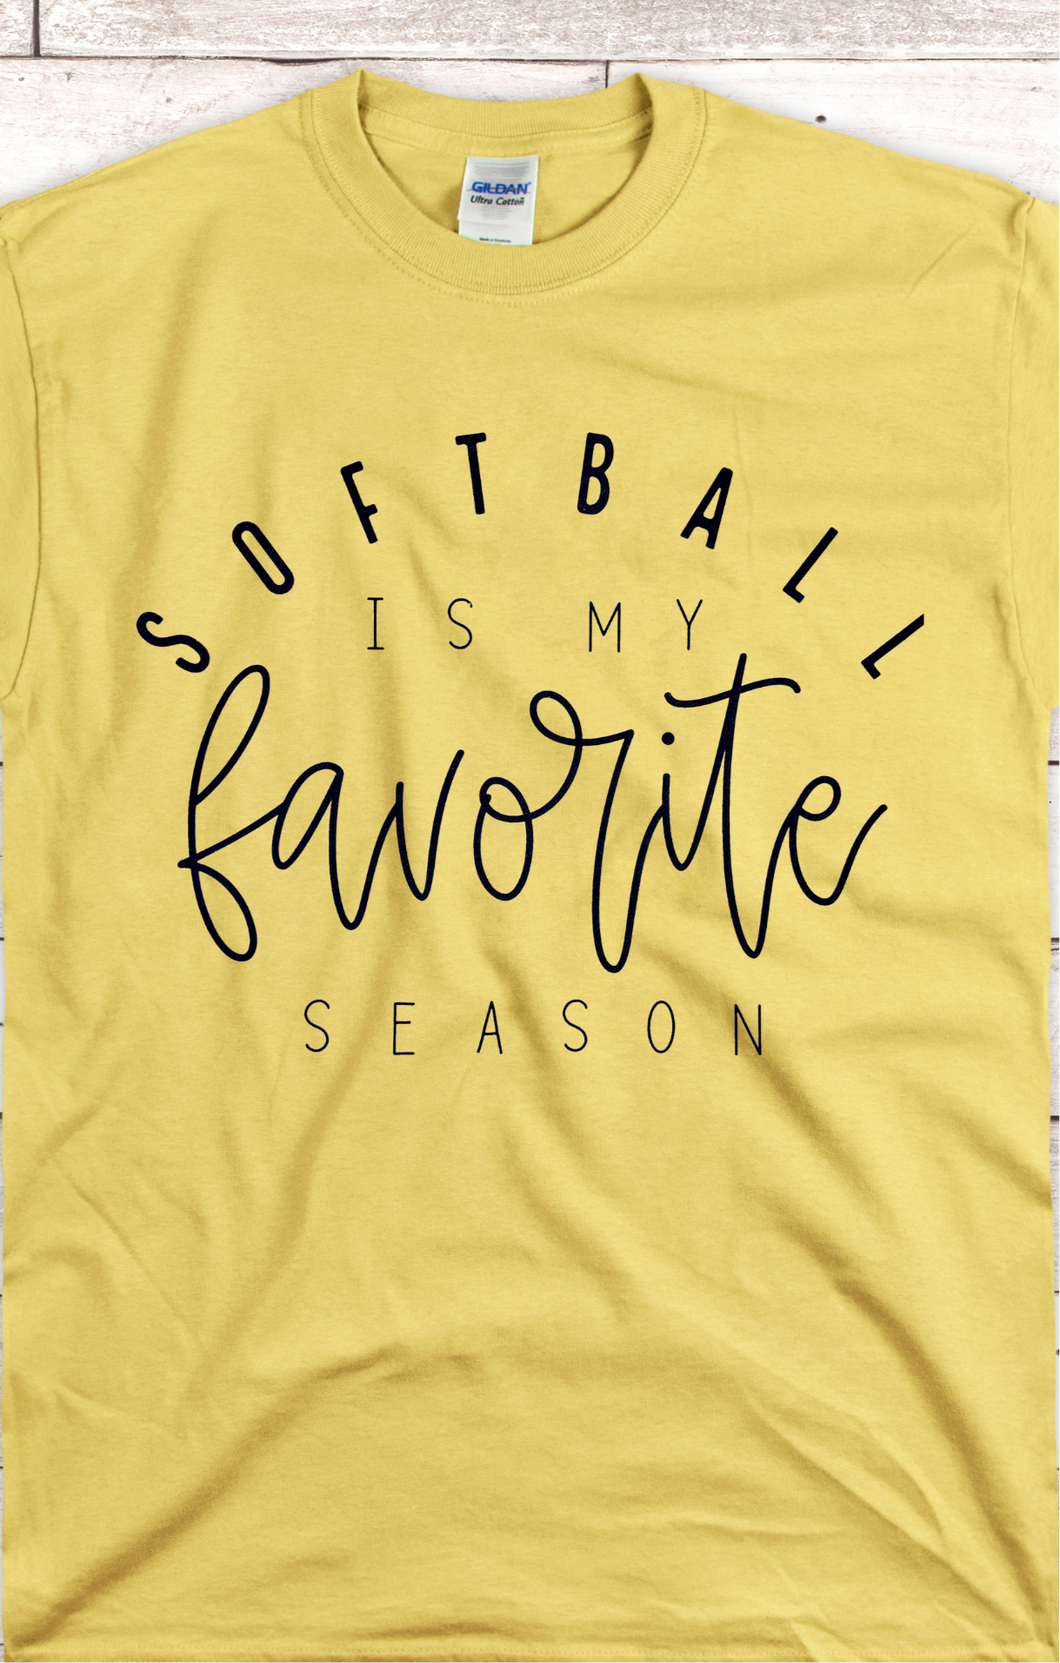 Softball is my favorite Season- Yellow